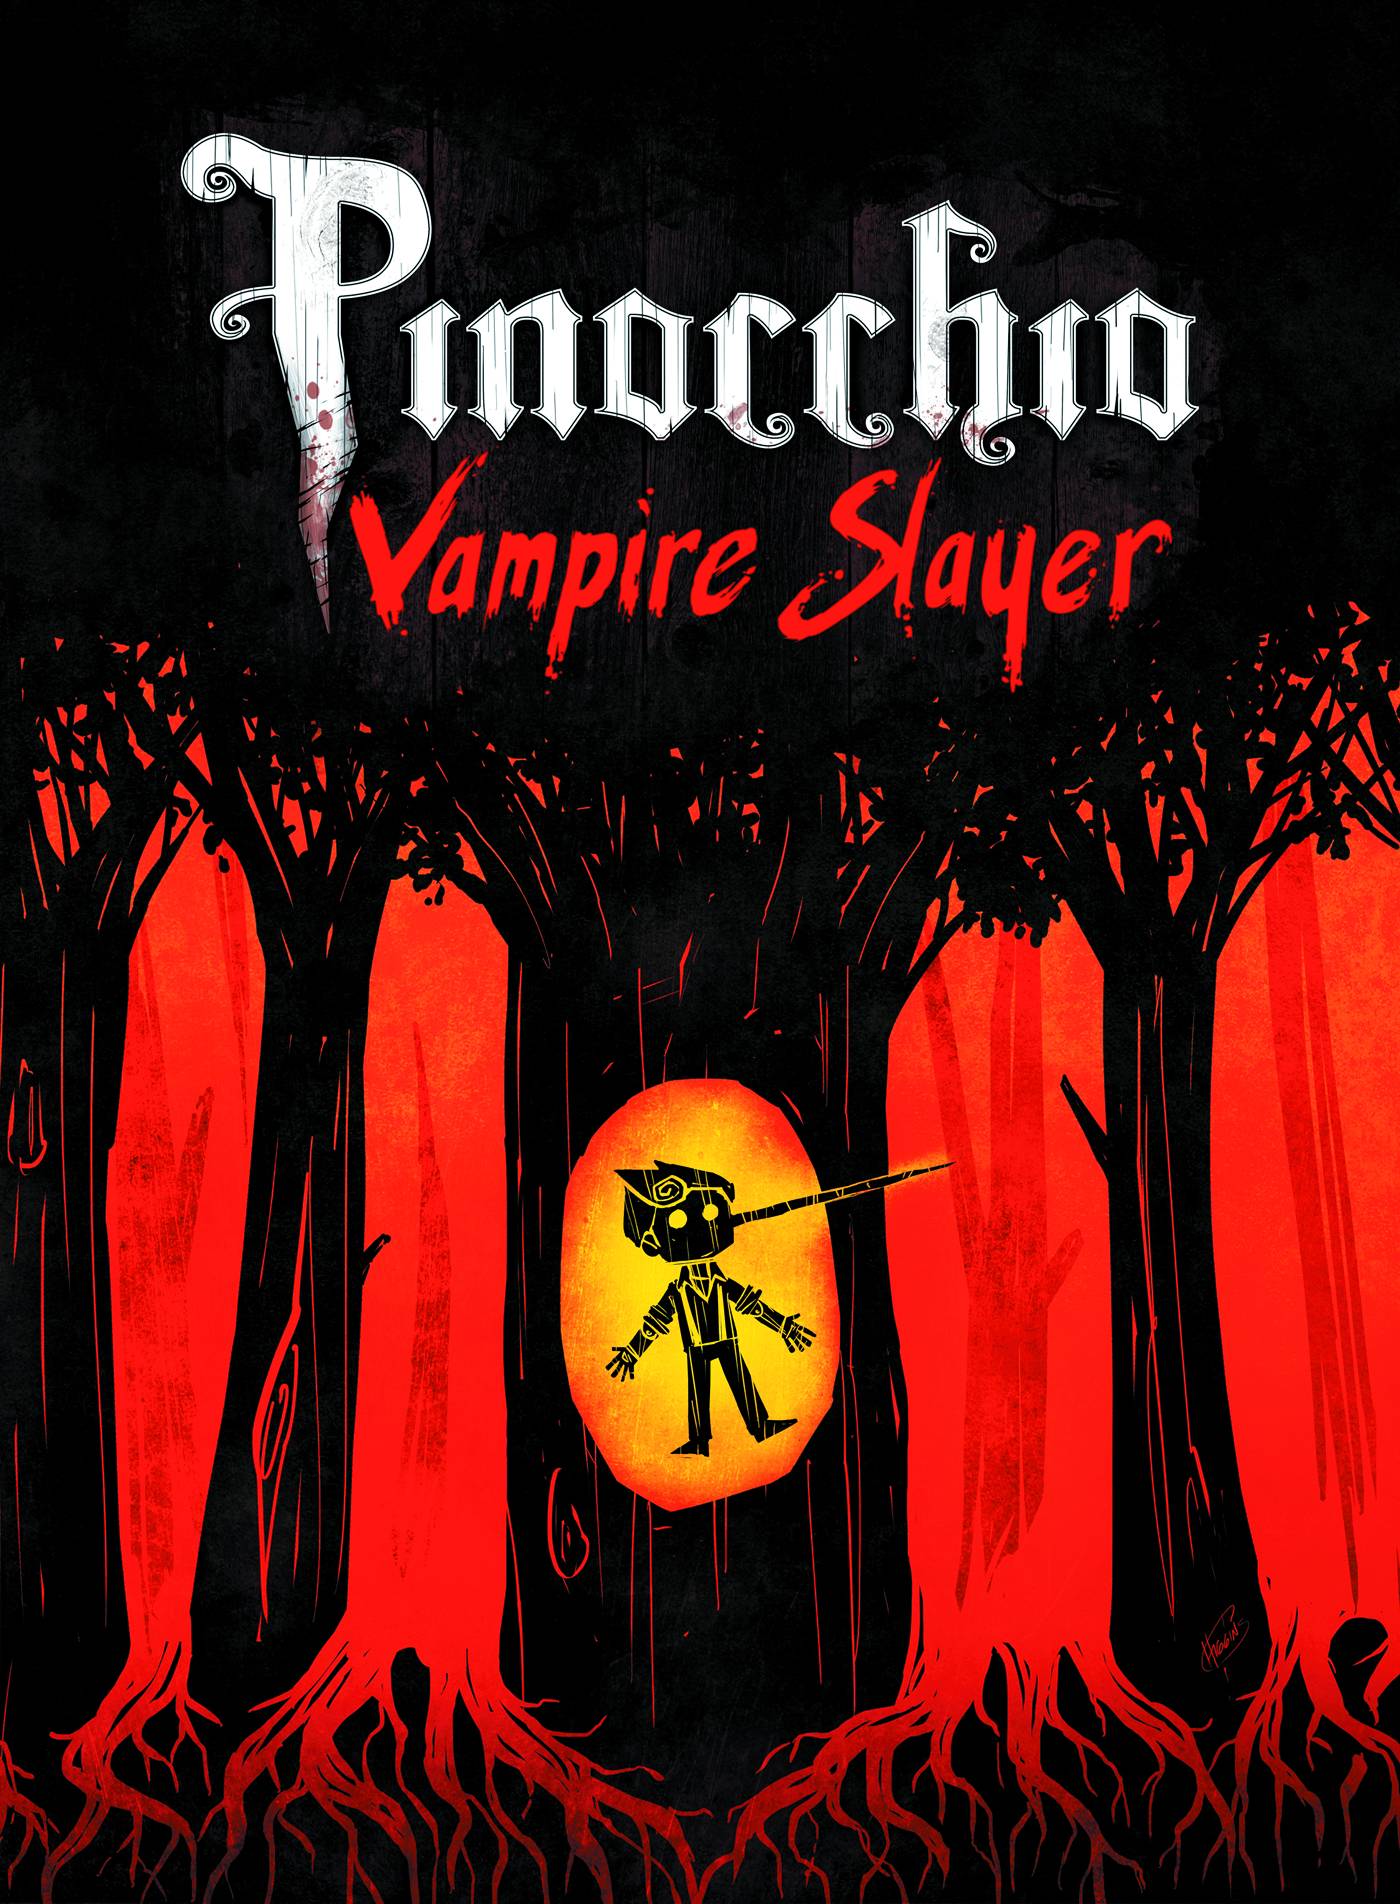 Pinocchio Vampire Slayer Graphic Novel Complete Edition